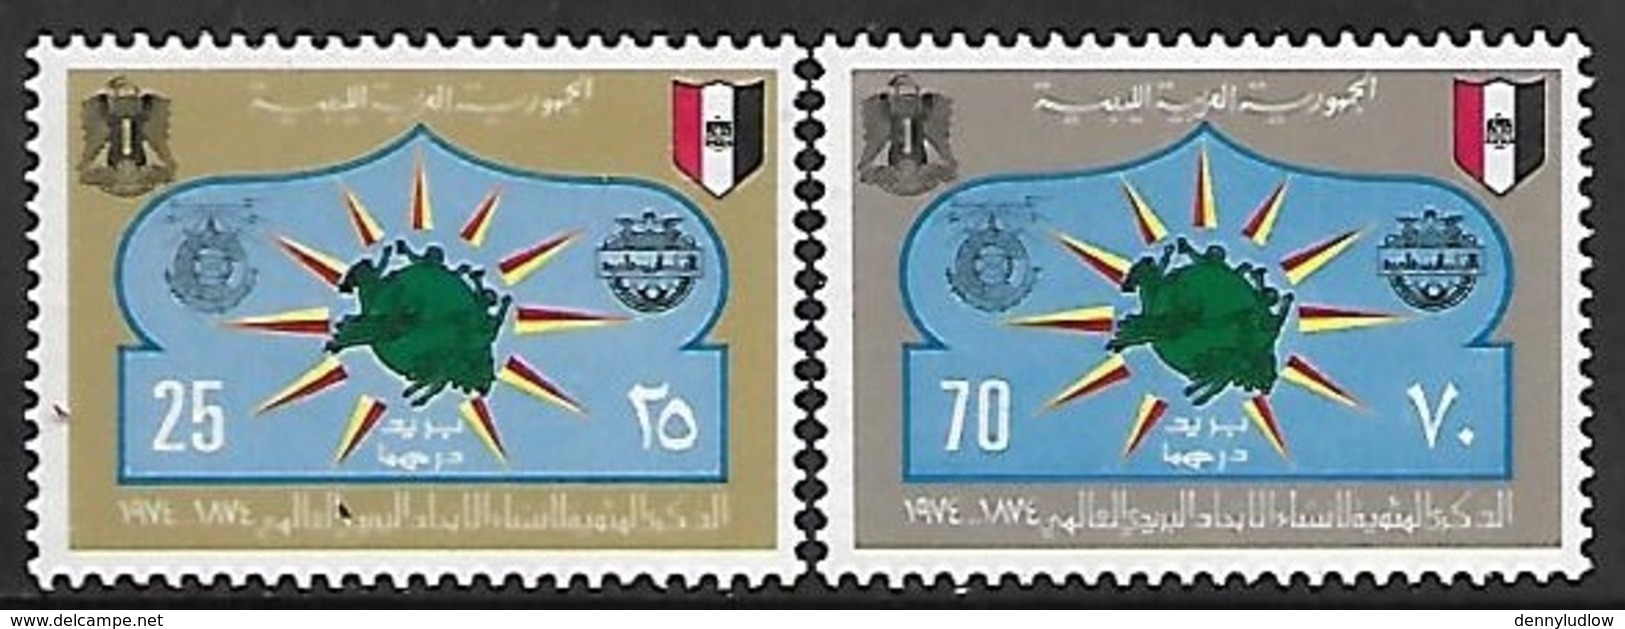 Libya  1974  Sc#542-3  UPU Set     MNH   2016 Scott Value $21.50 - Libya